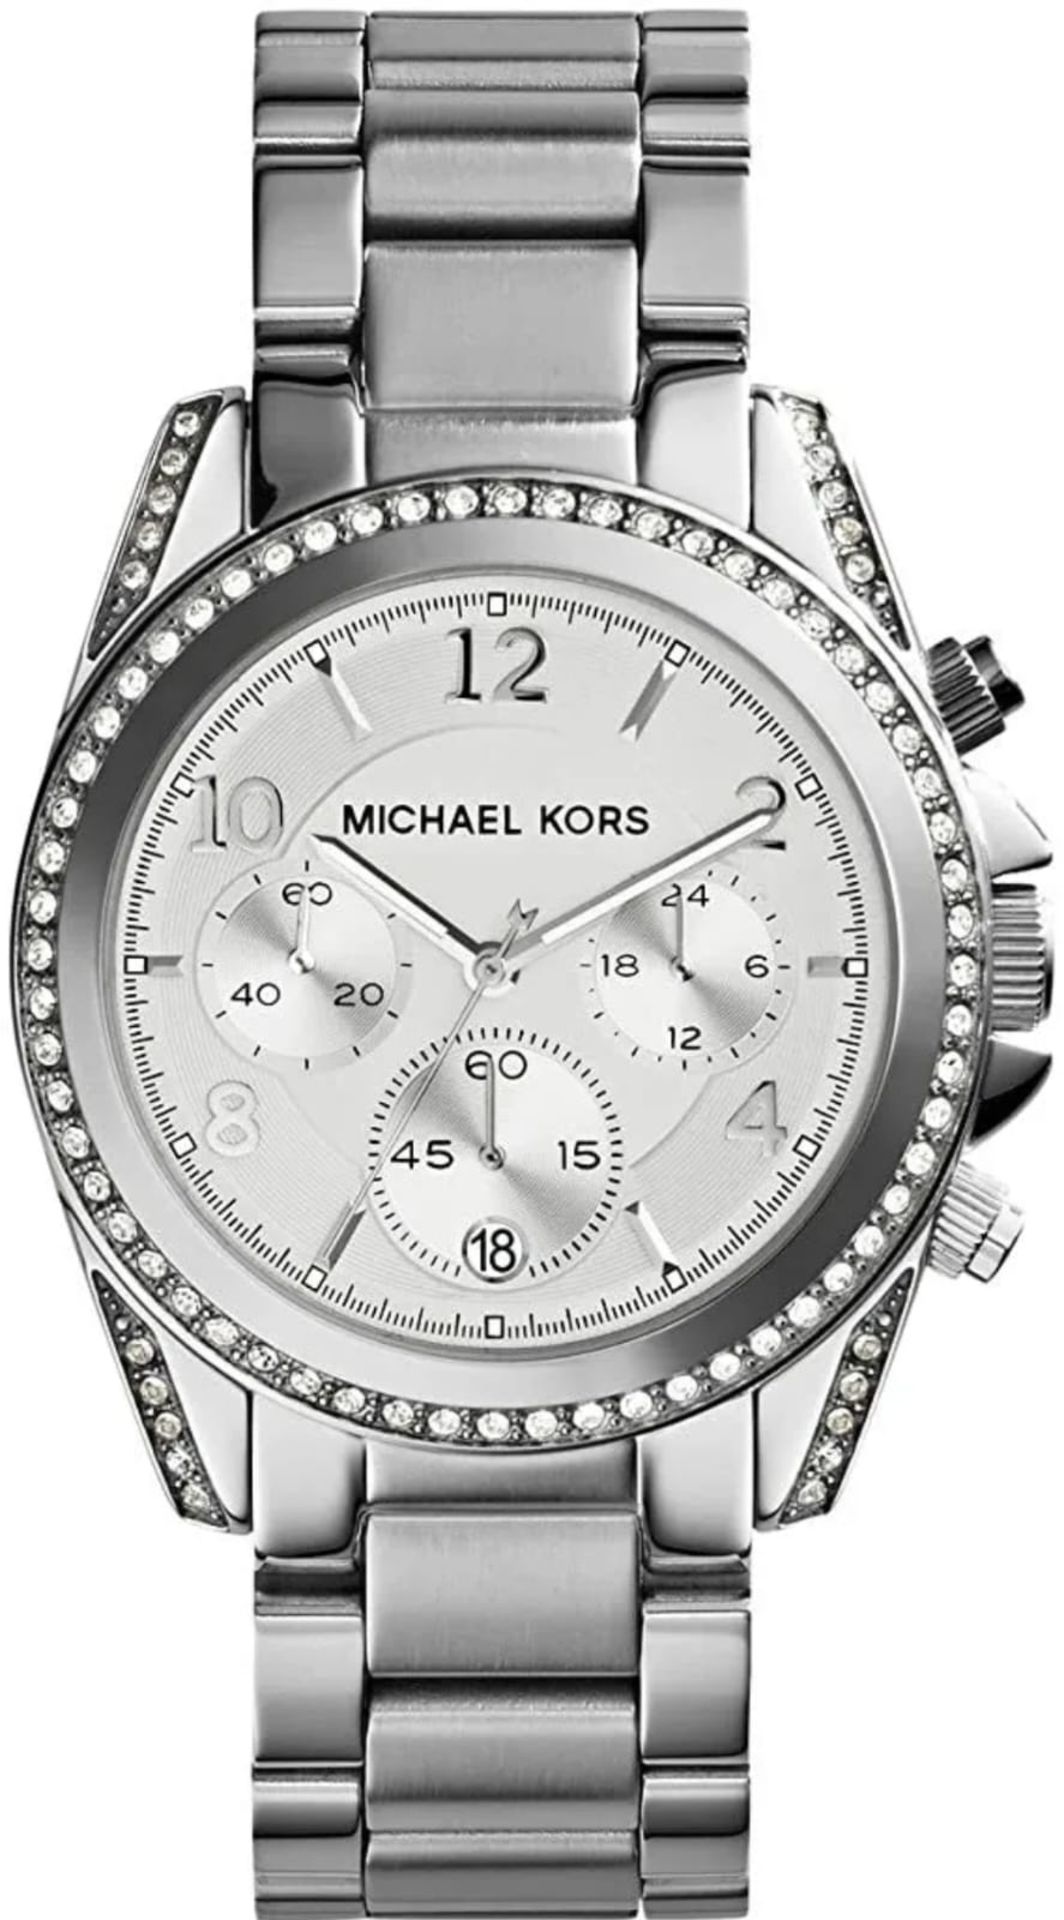 Michael Kors Mk5165 Women's Silver Bracelet Chronograph Quartz Watch - Image 6 of 6